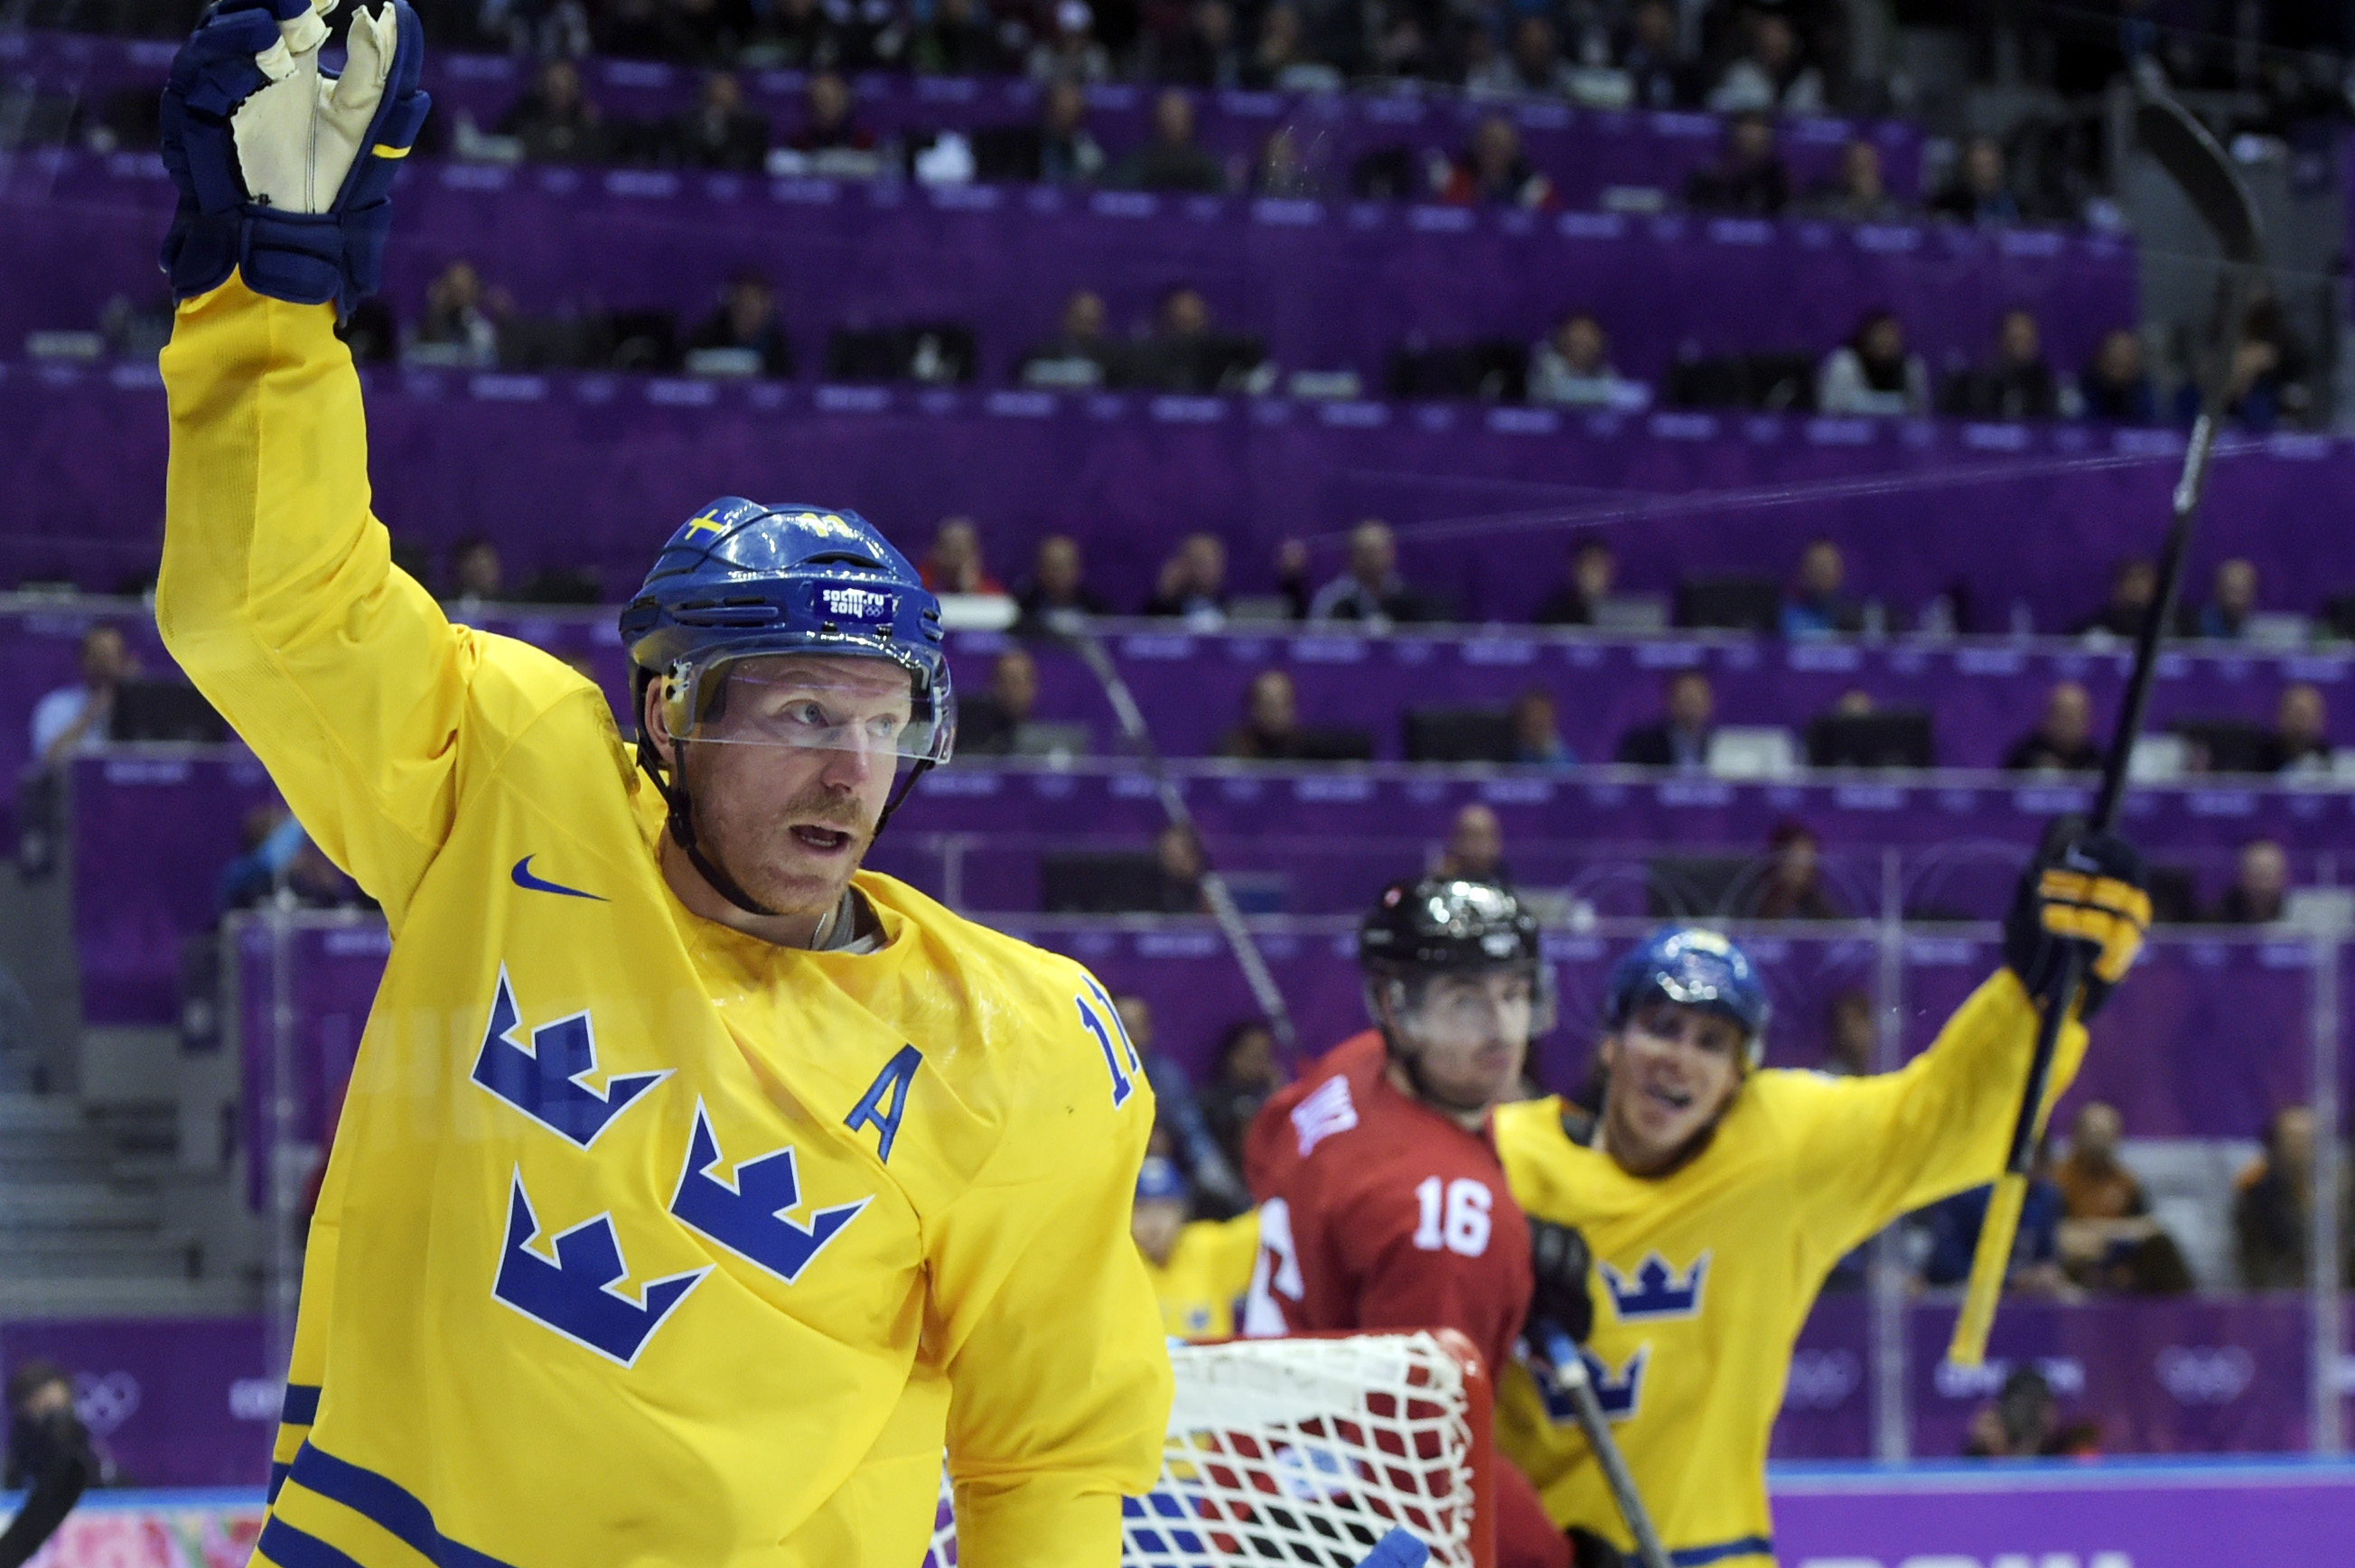 Olympiska spelen, Sverige, Tre Kronor, Erik Karlsson, Schweiz, Daniel Alfredsson, ishockey